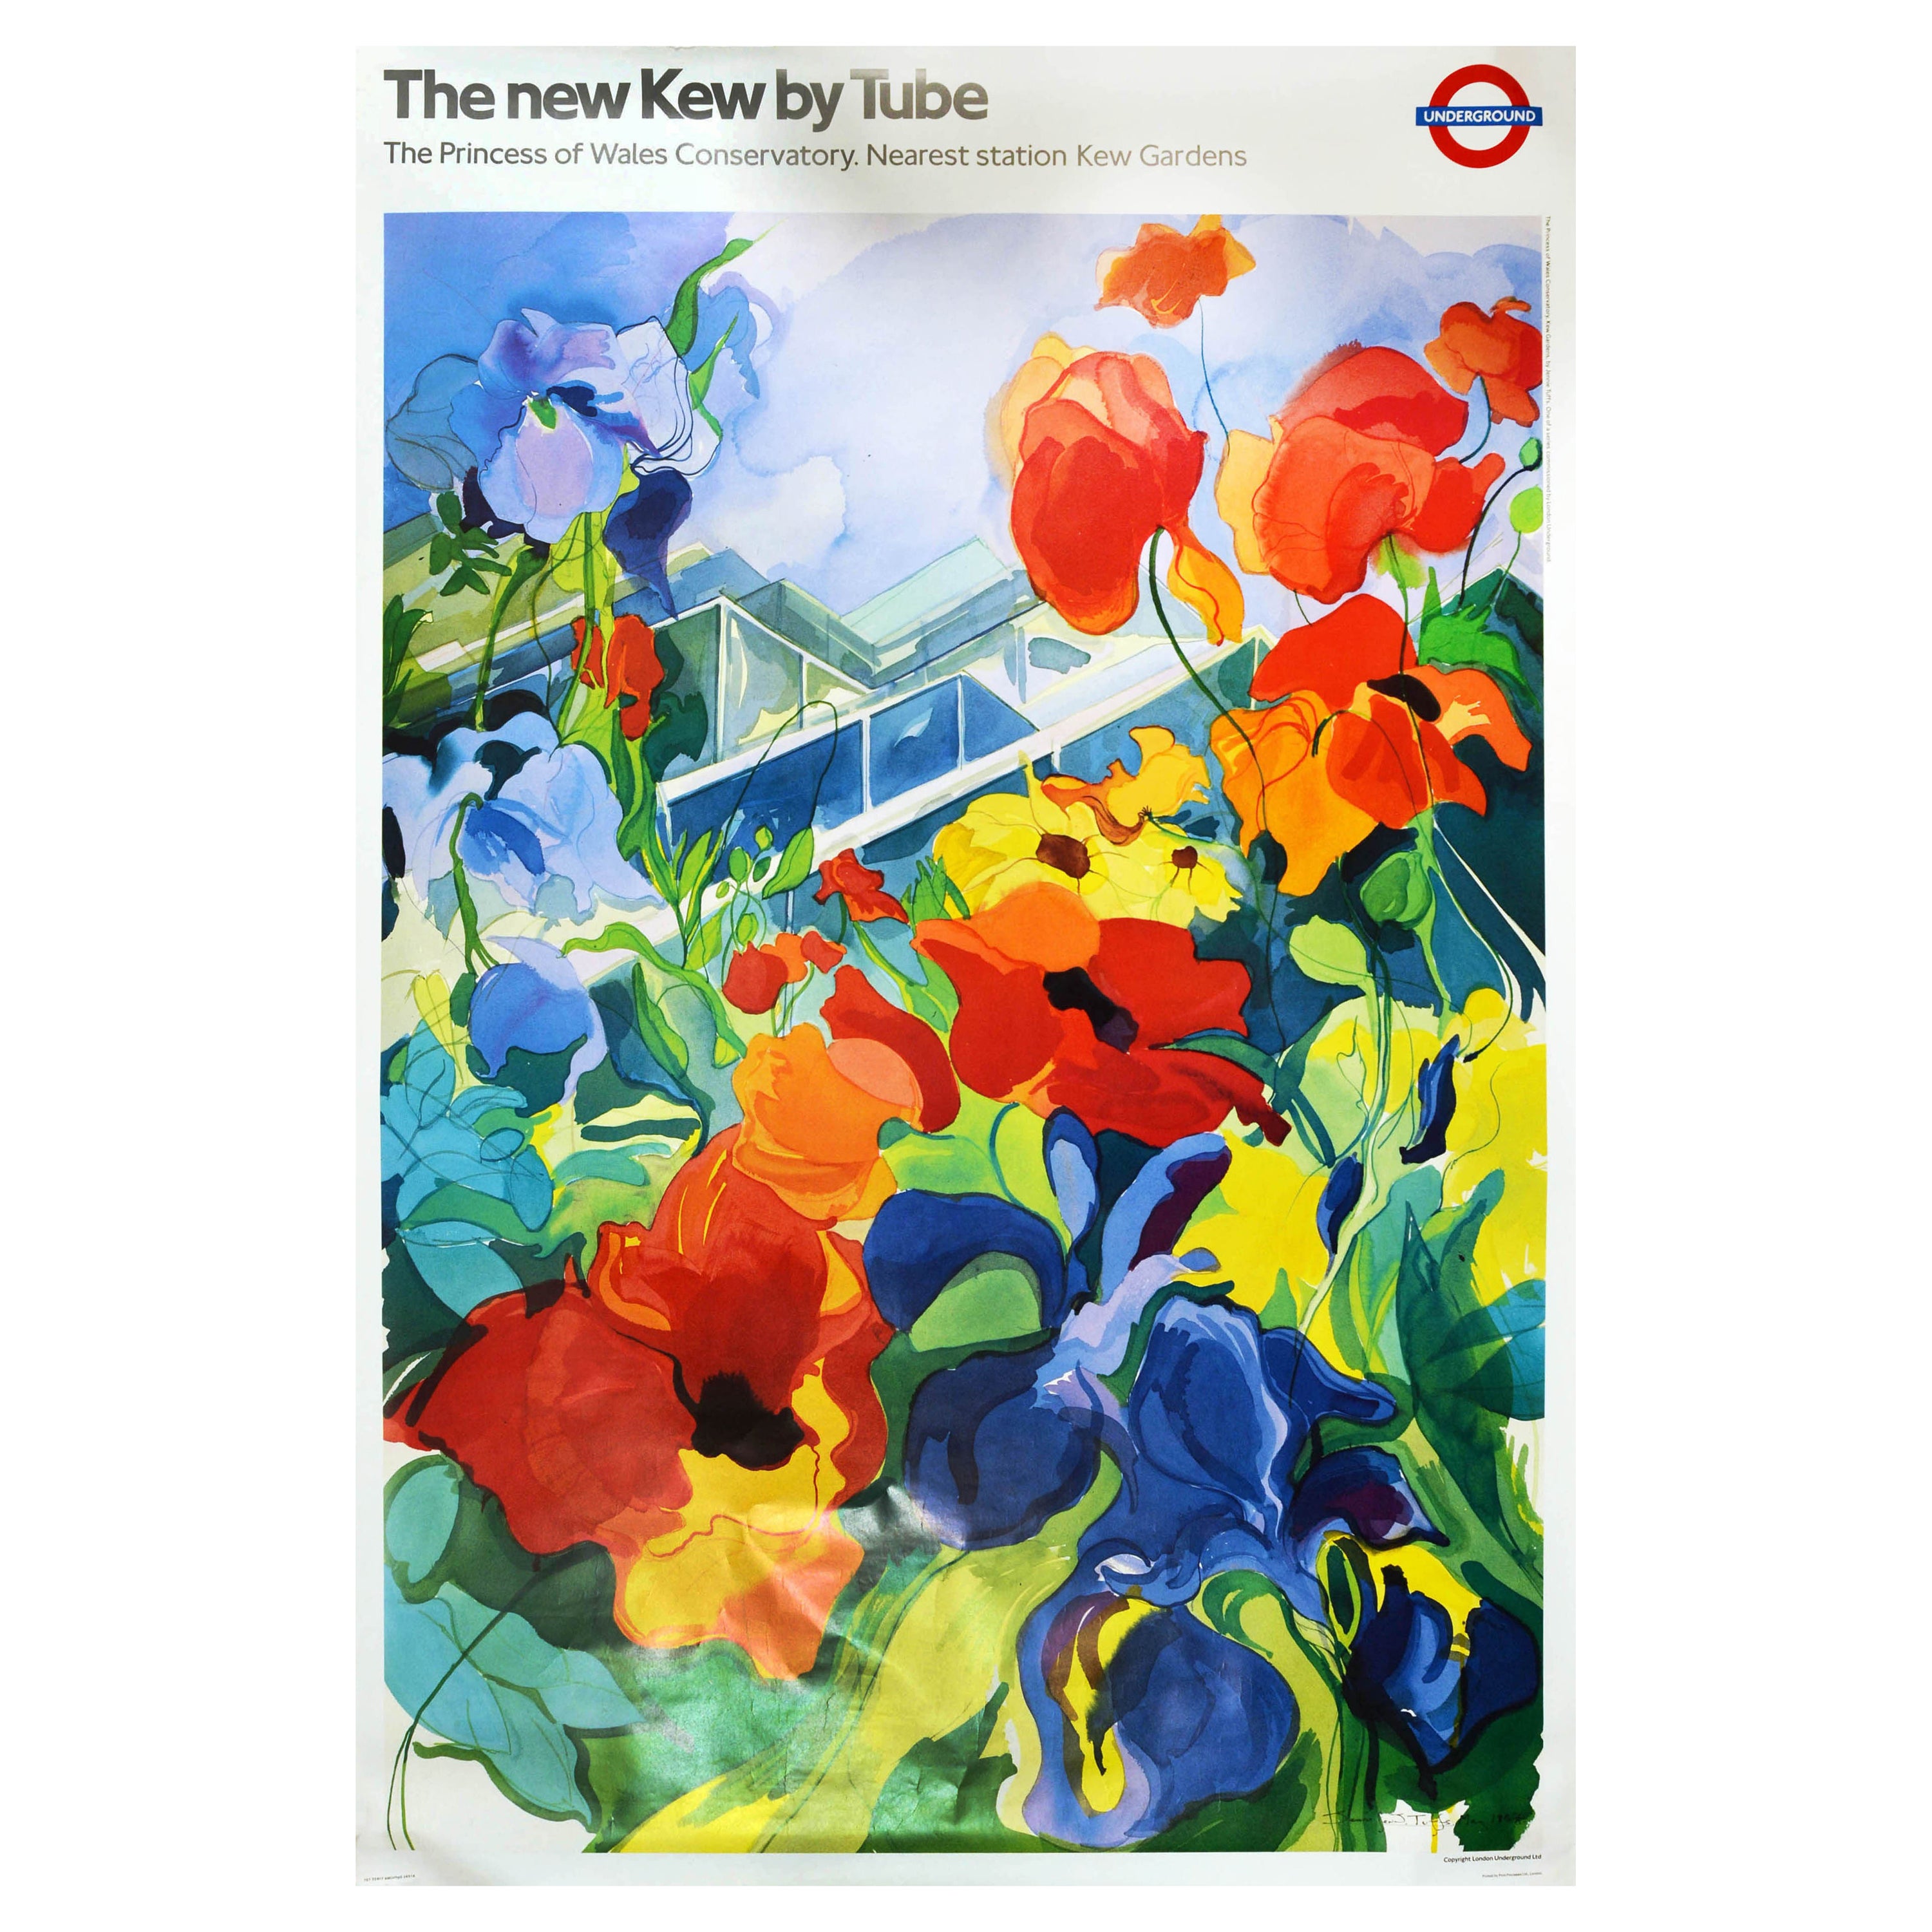 Original Vintage Travel Poster London Underground New Kew By Tube Iris Flower